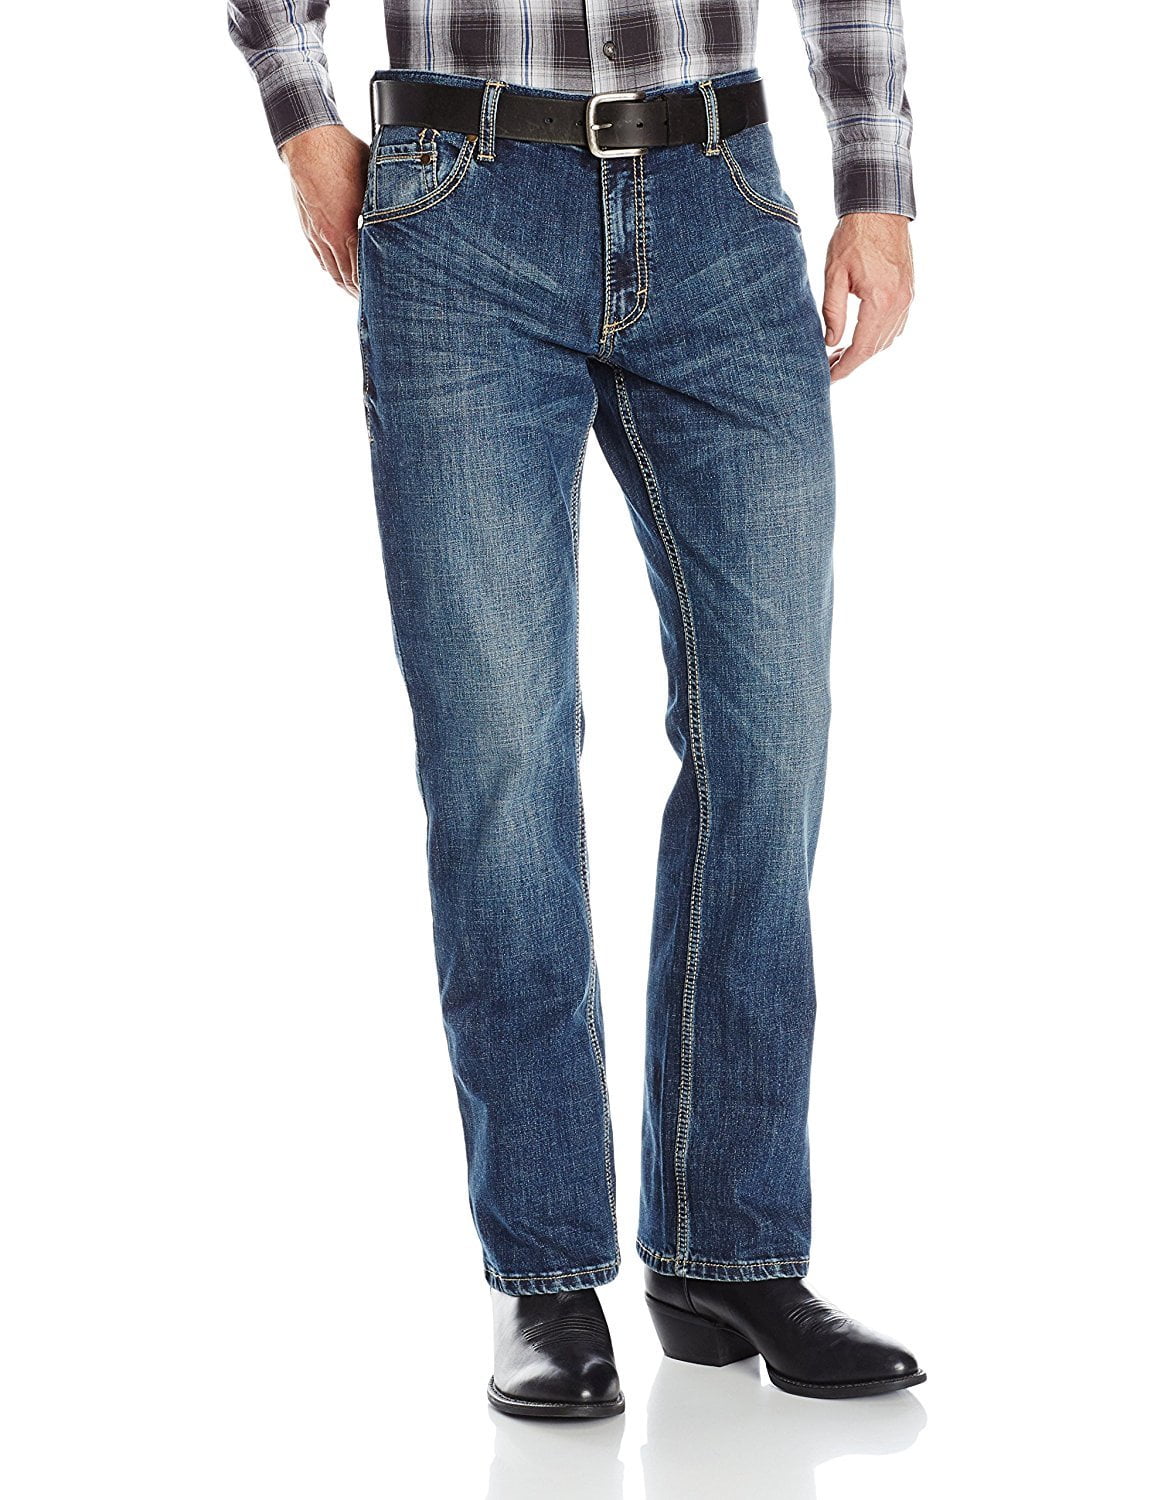 Wrangler Men's Retro Slim Fit Boot Cut Jean, Layton, 34x30 